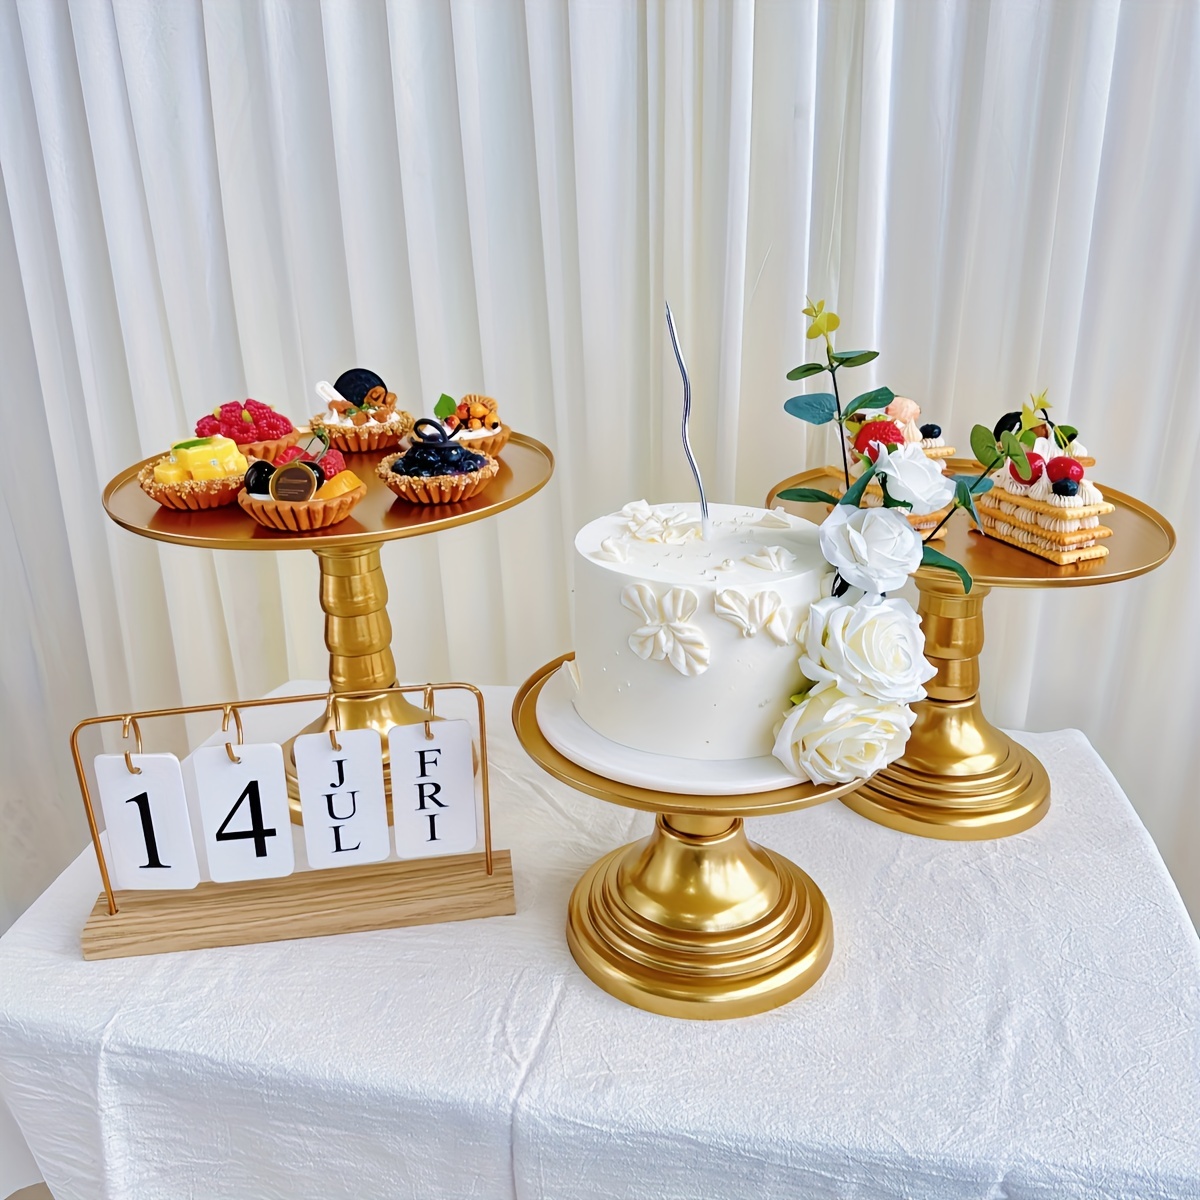 55 Stylish Wedding Dessert Table Ideas - Weddingomania